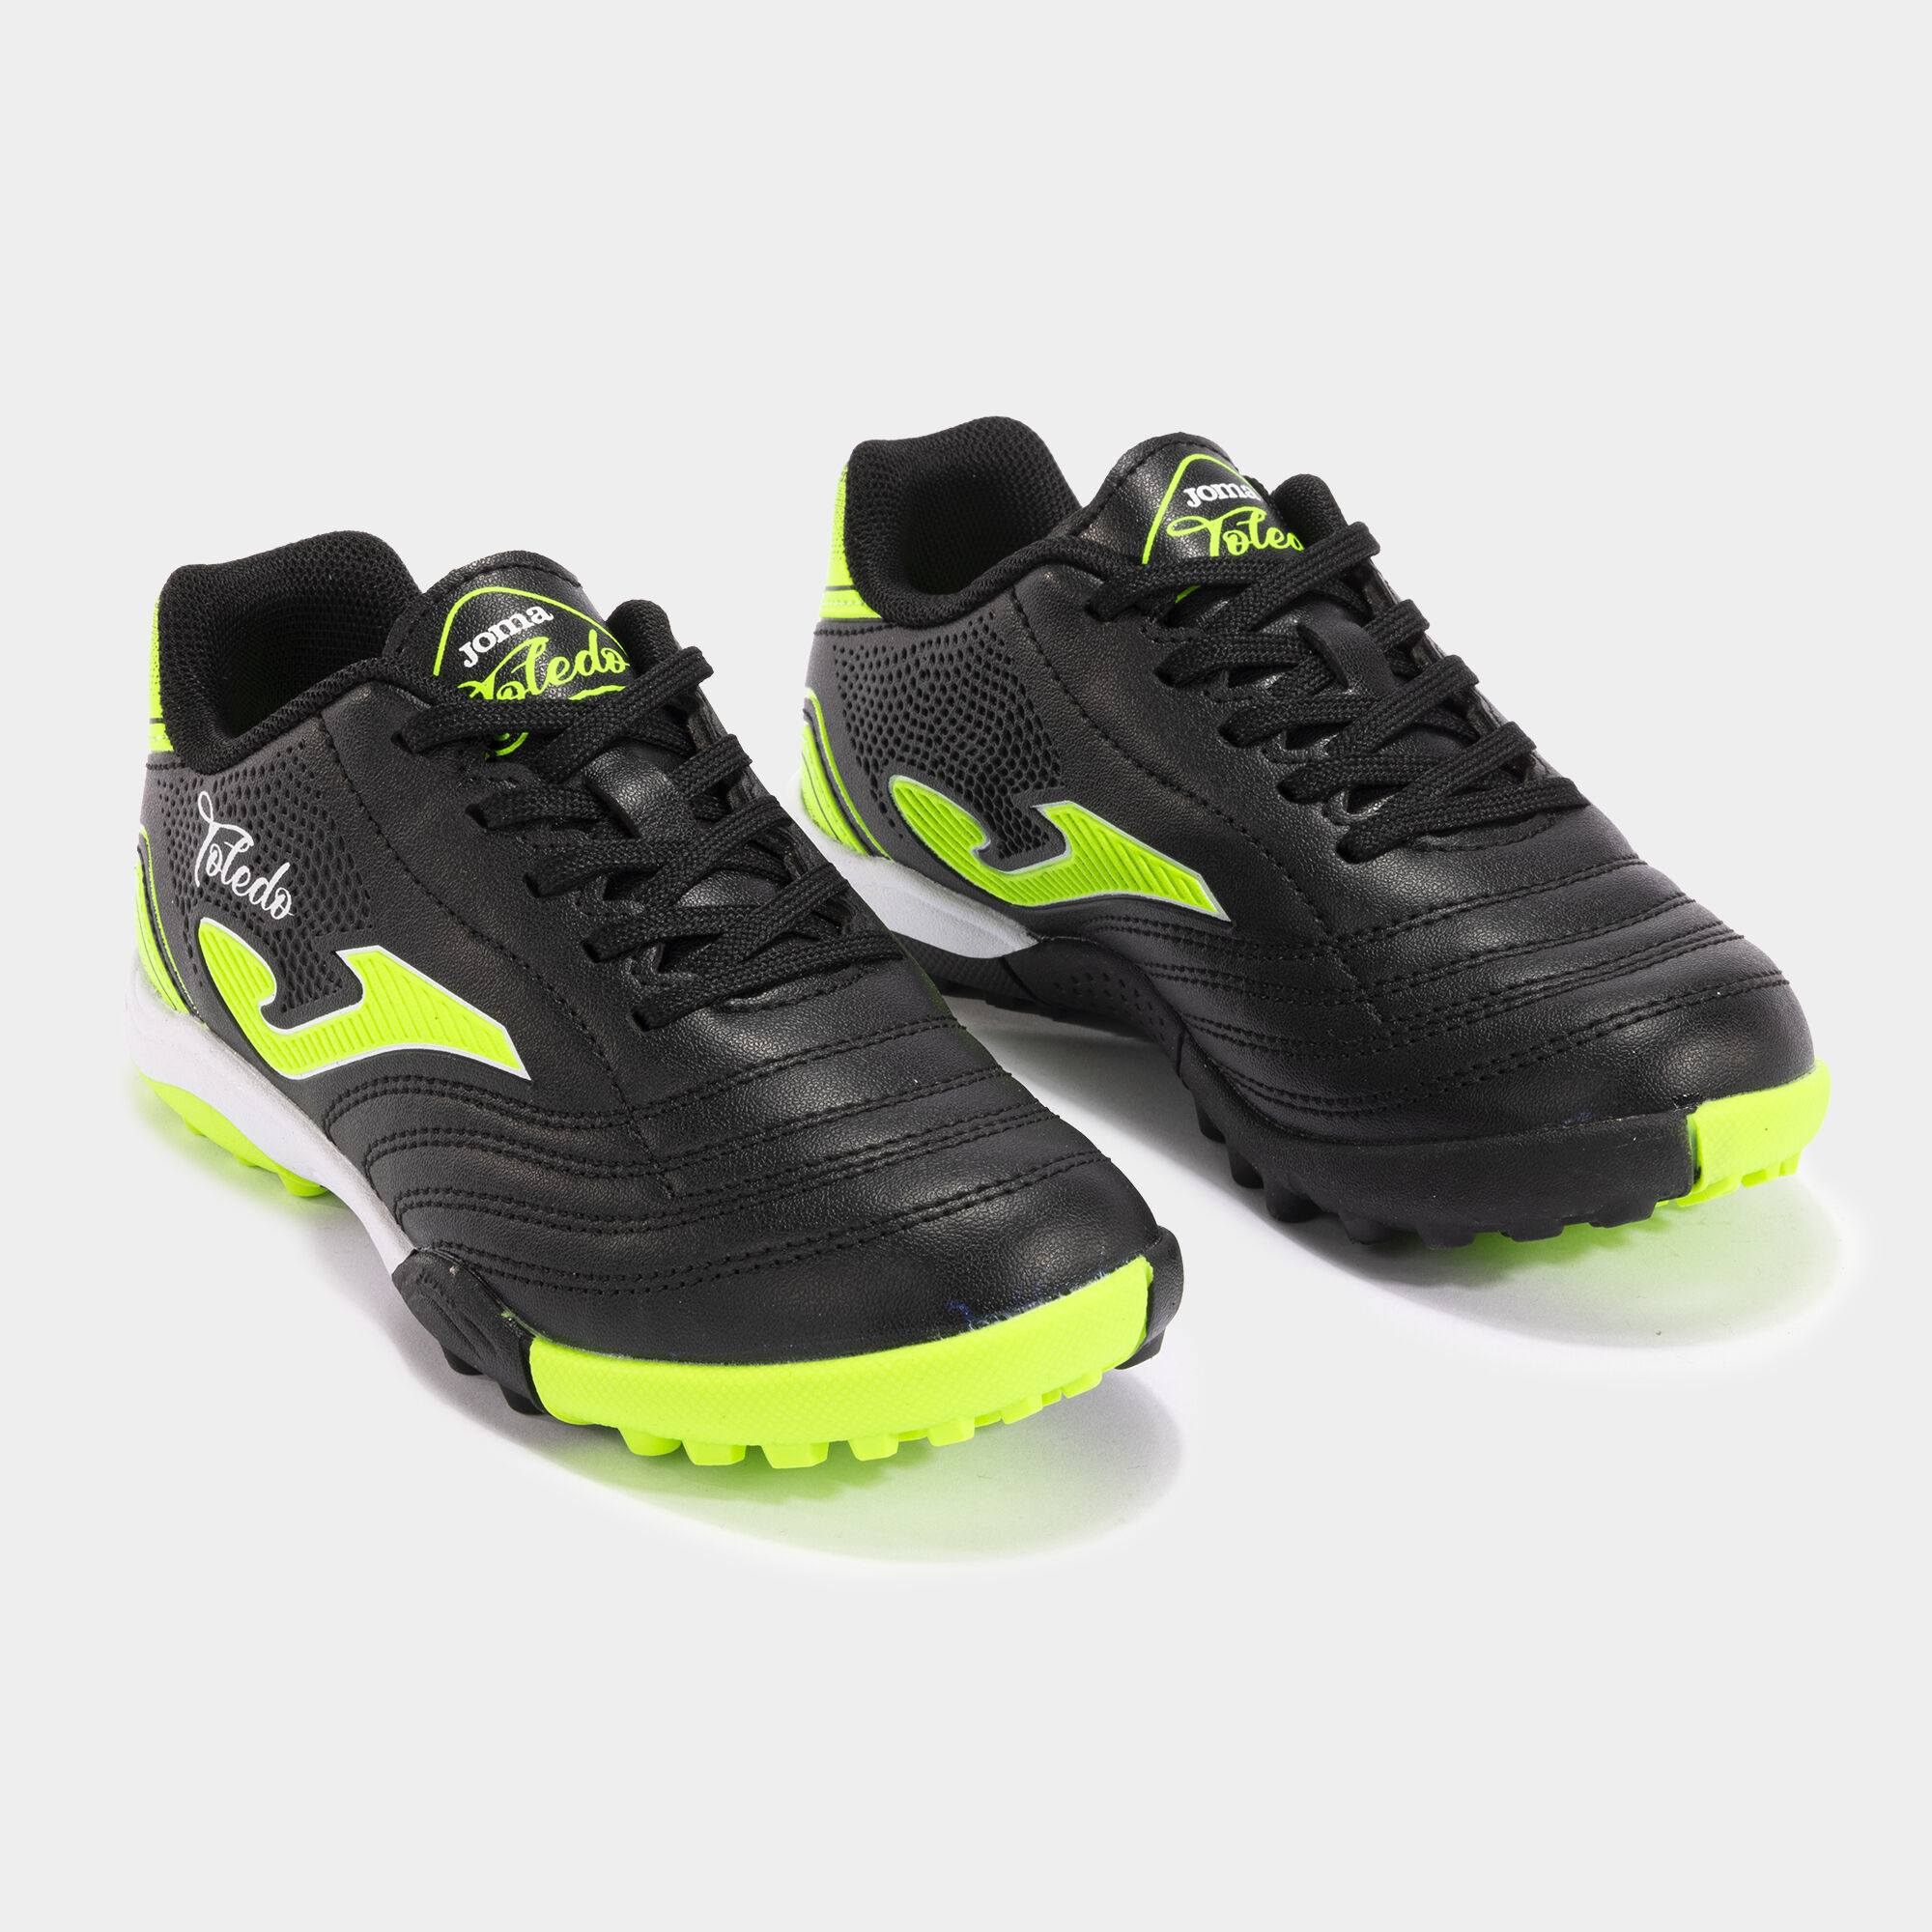 Football boots Toledo Jr 24 turf junior black fluorescent green